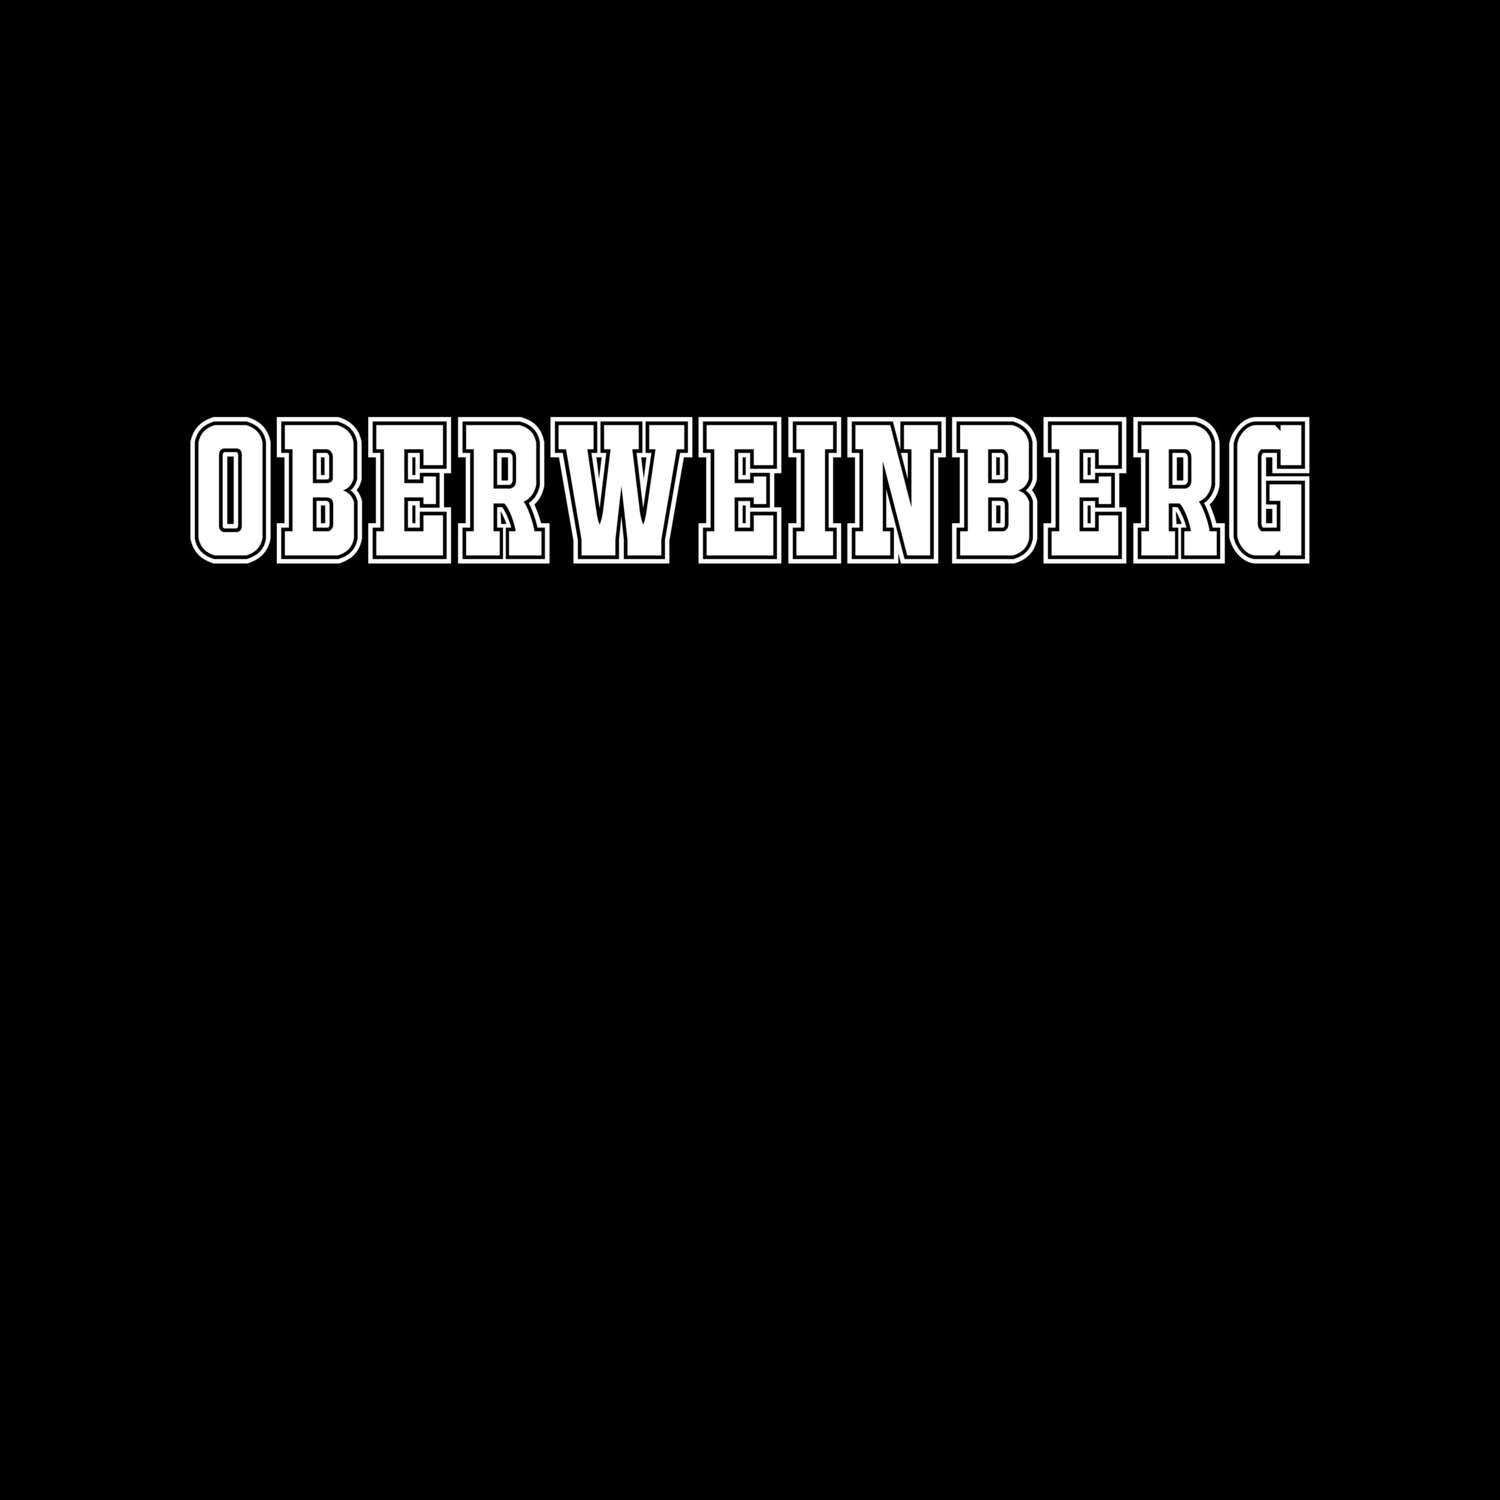 Oberweinberg T-Shirt »Classic«